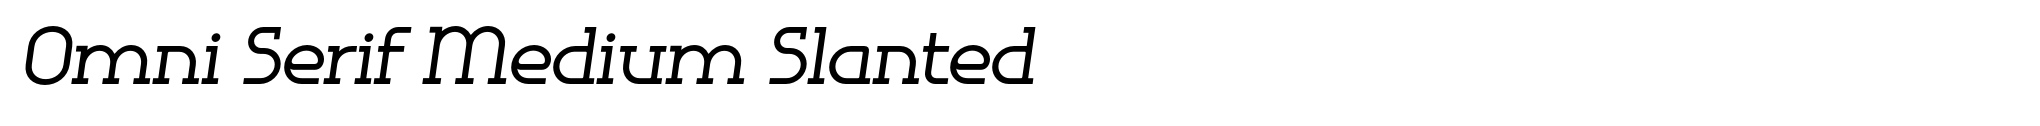 Omni Serif Medium Slanted image